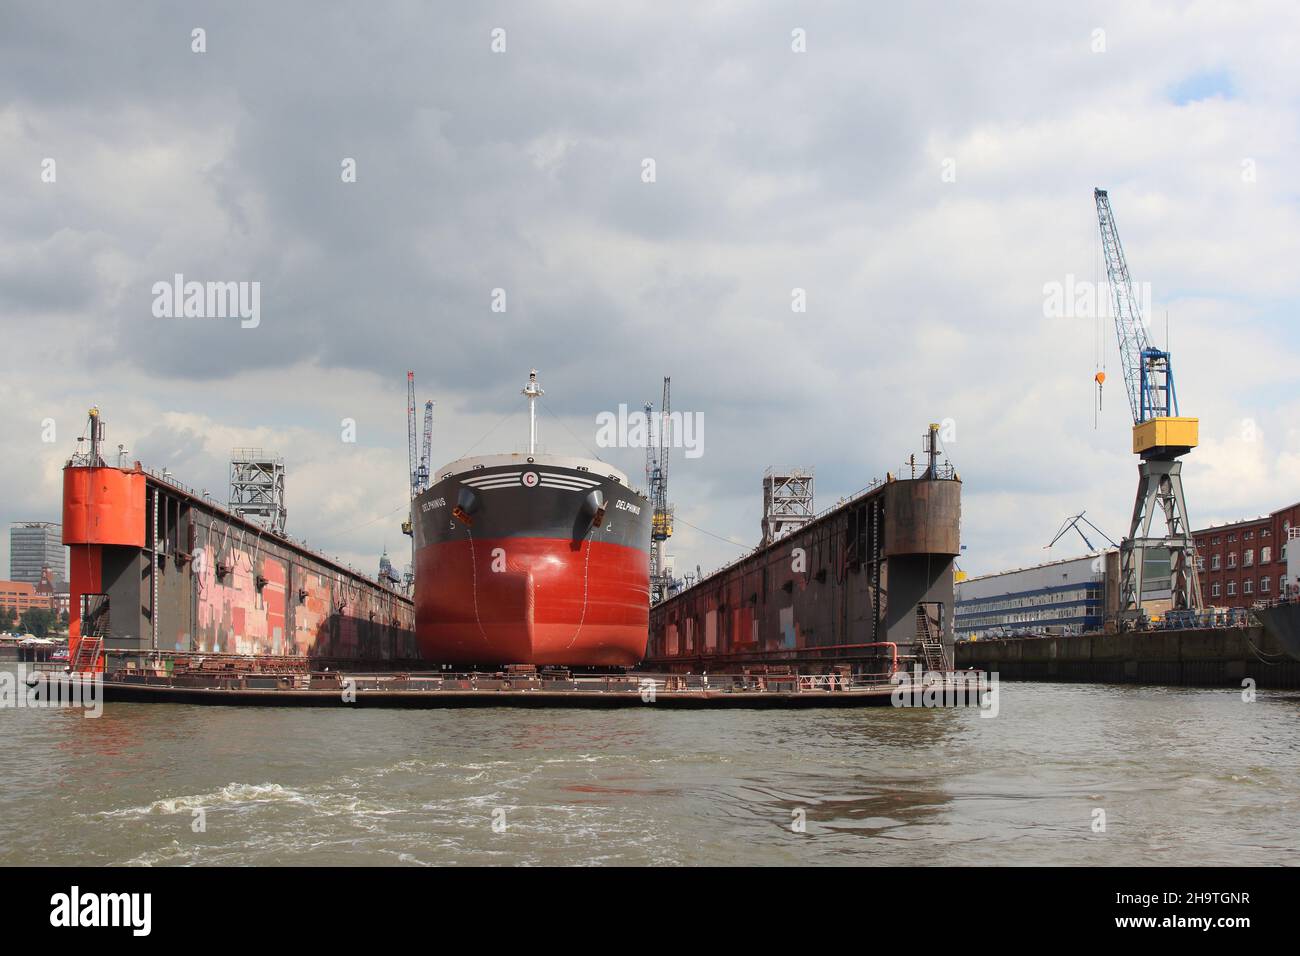 Hamburg Hafen - Dock / Hamburg Harbour - Dock Stock Photo - Alamy